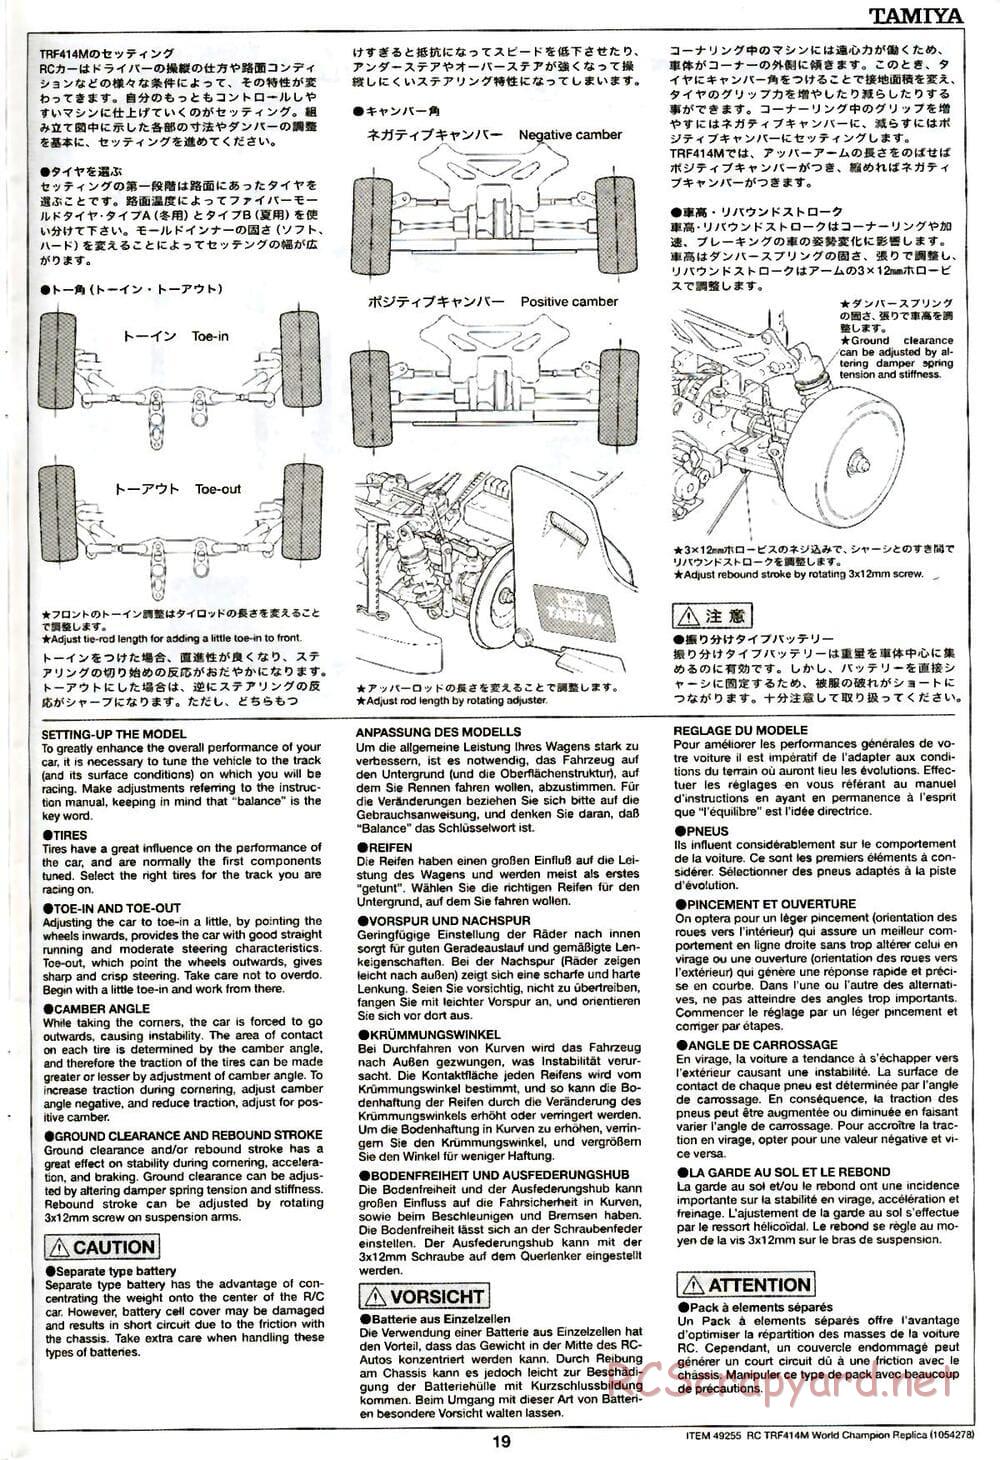 Tamiya - TRF414M World Champion Replica Chassis - Manual - Page 19